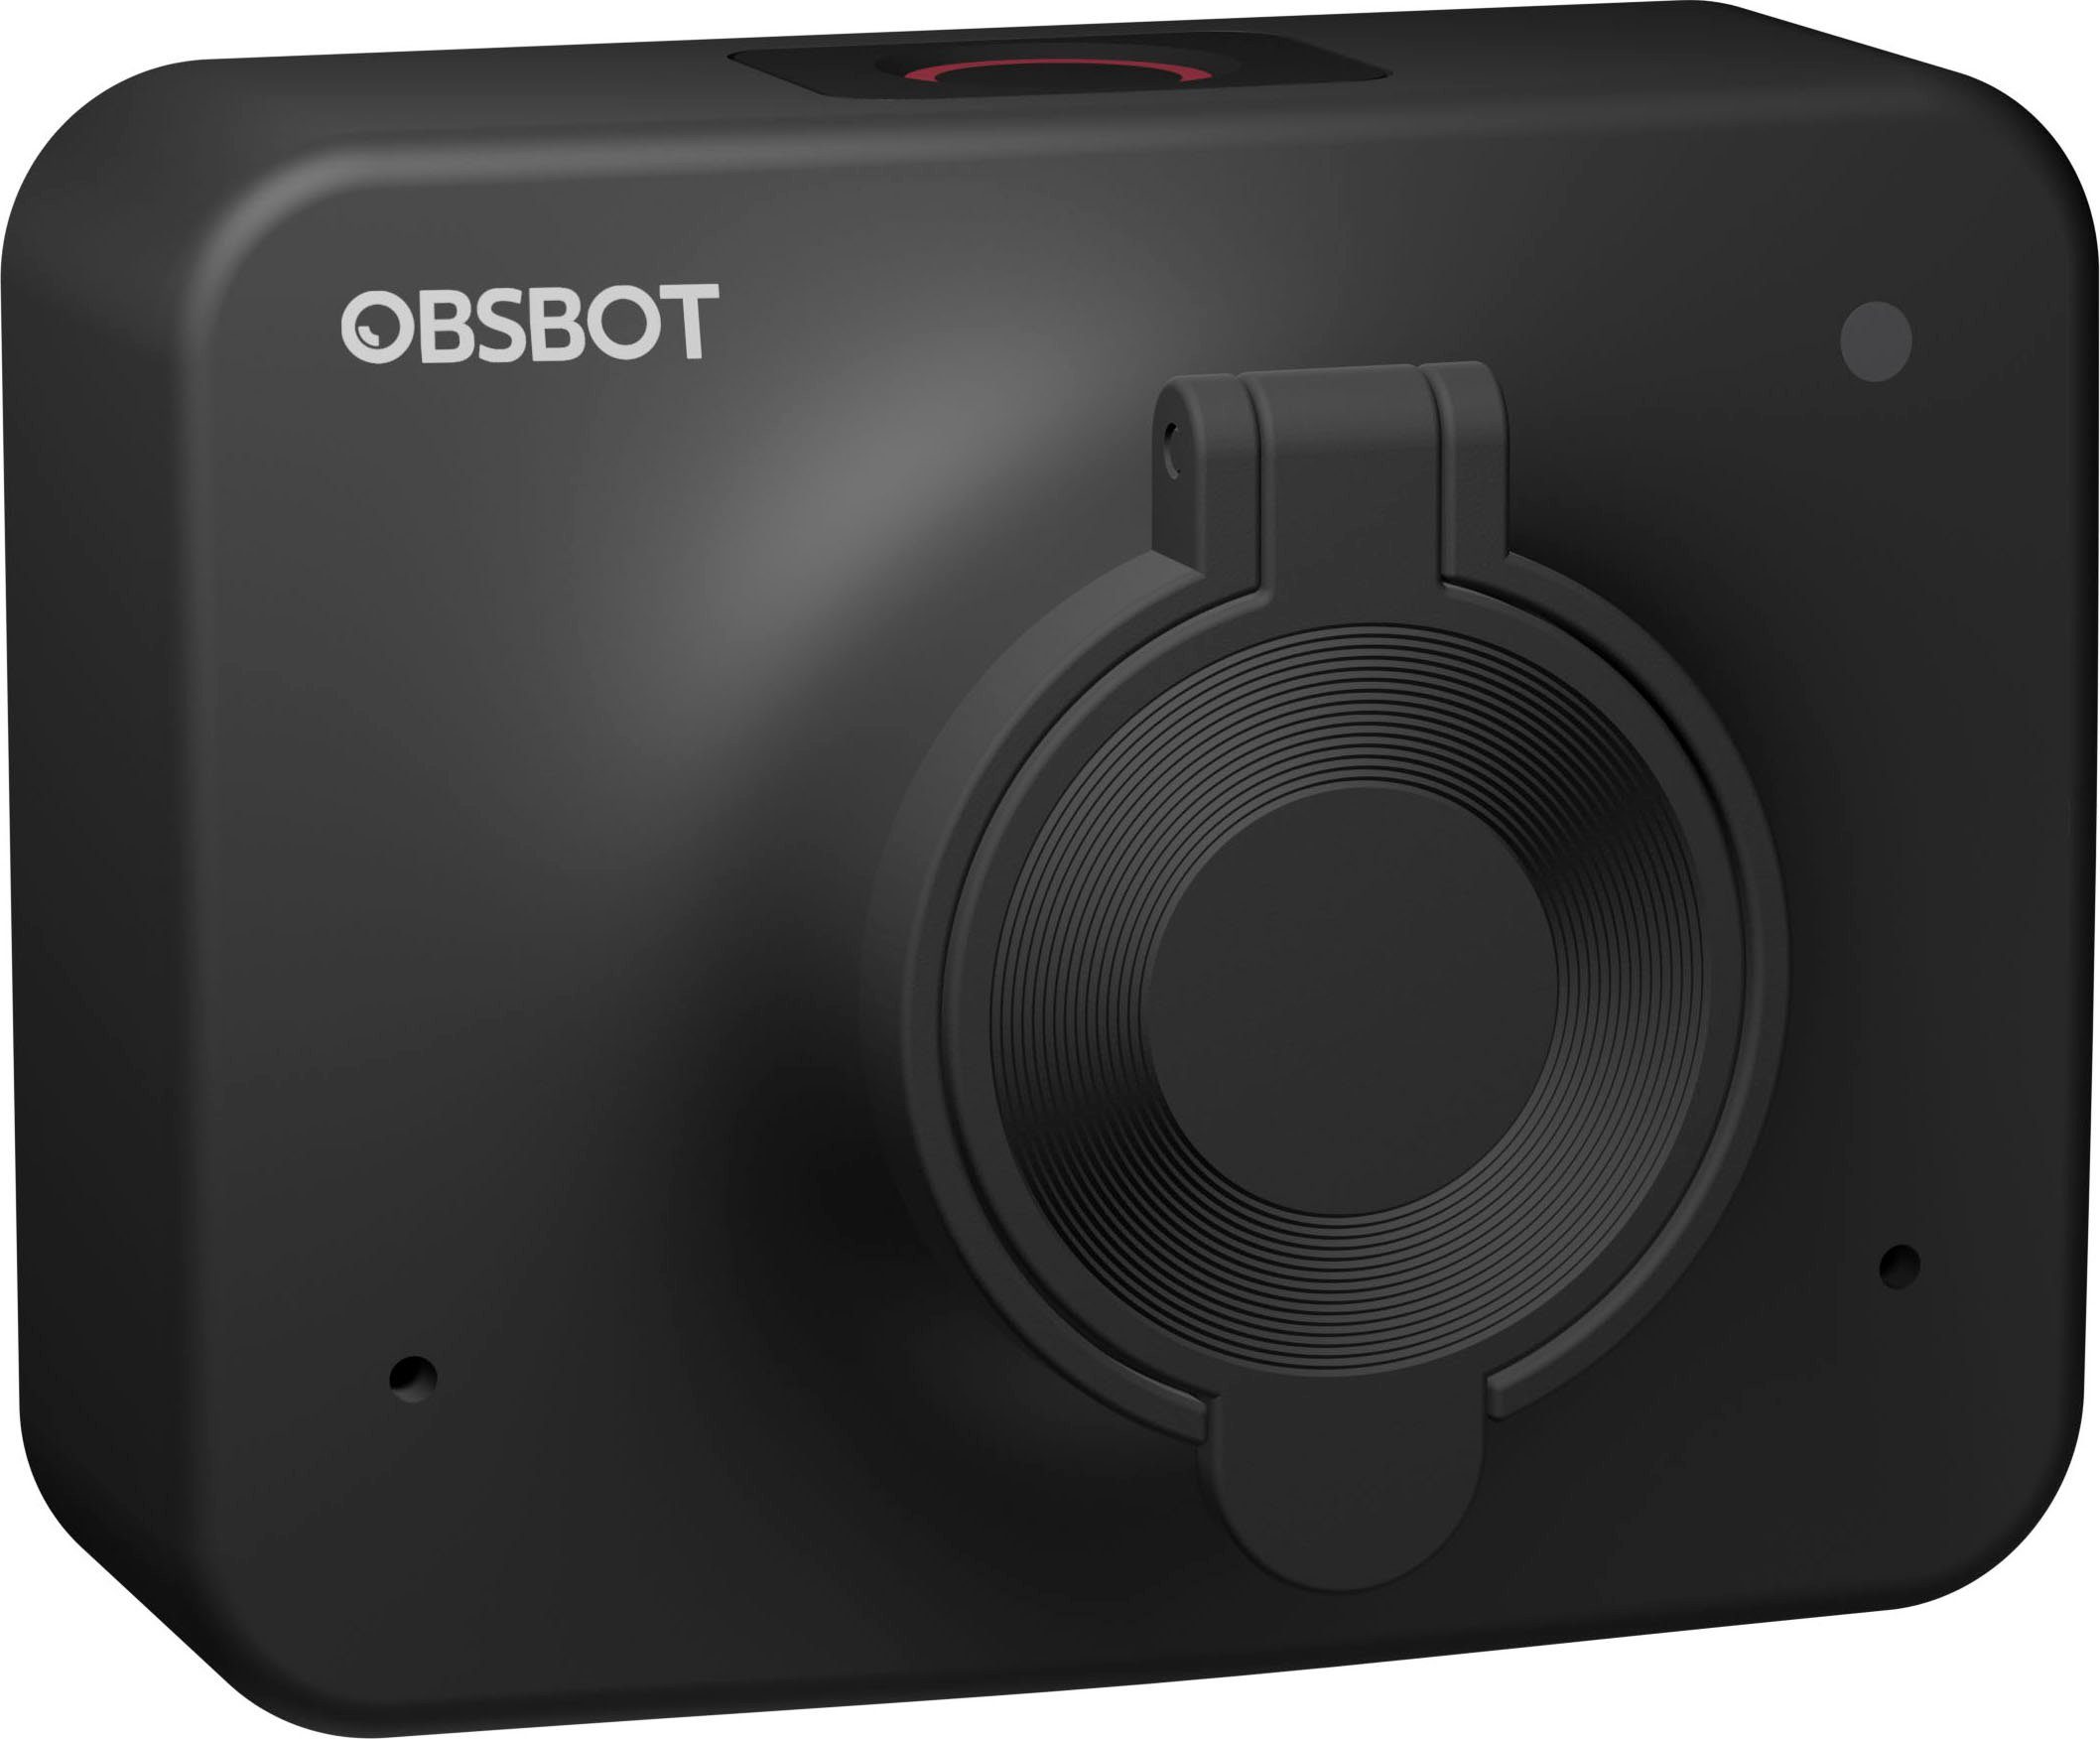 Meet professionelle HD-Webcam OBSBOT Livestreams) Webcam AI-gestützte (Full HD, für